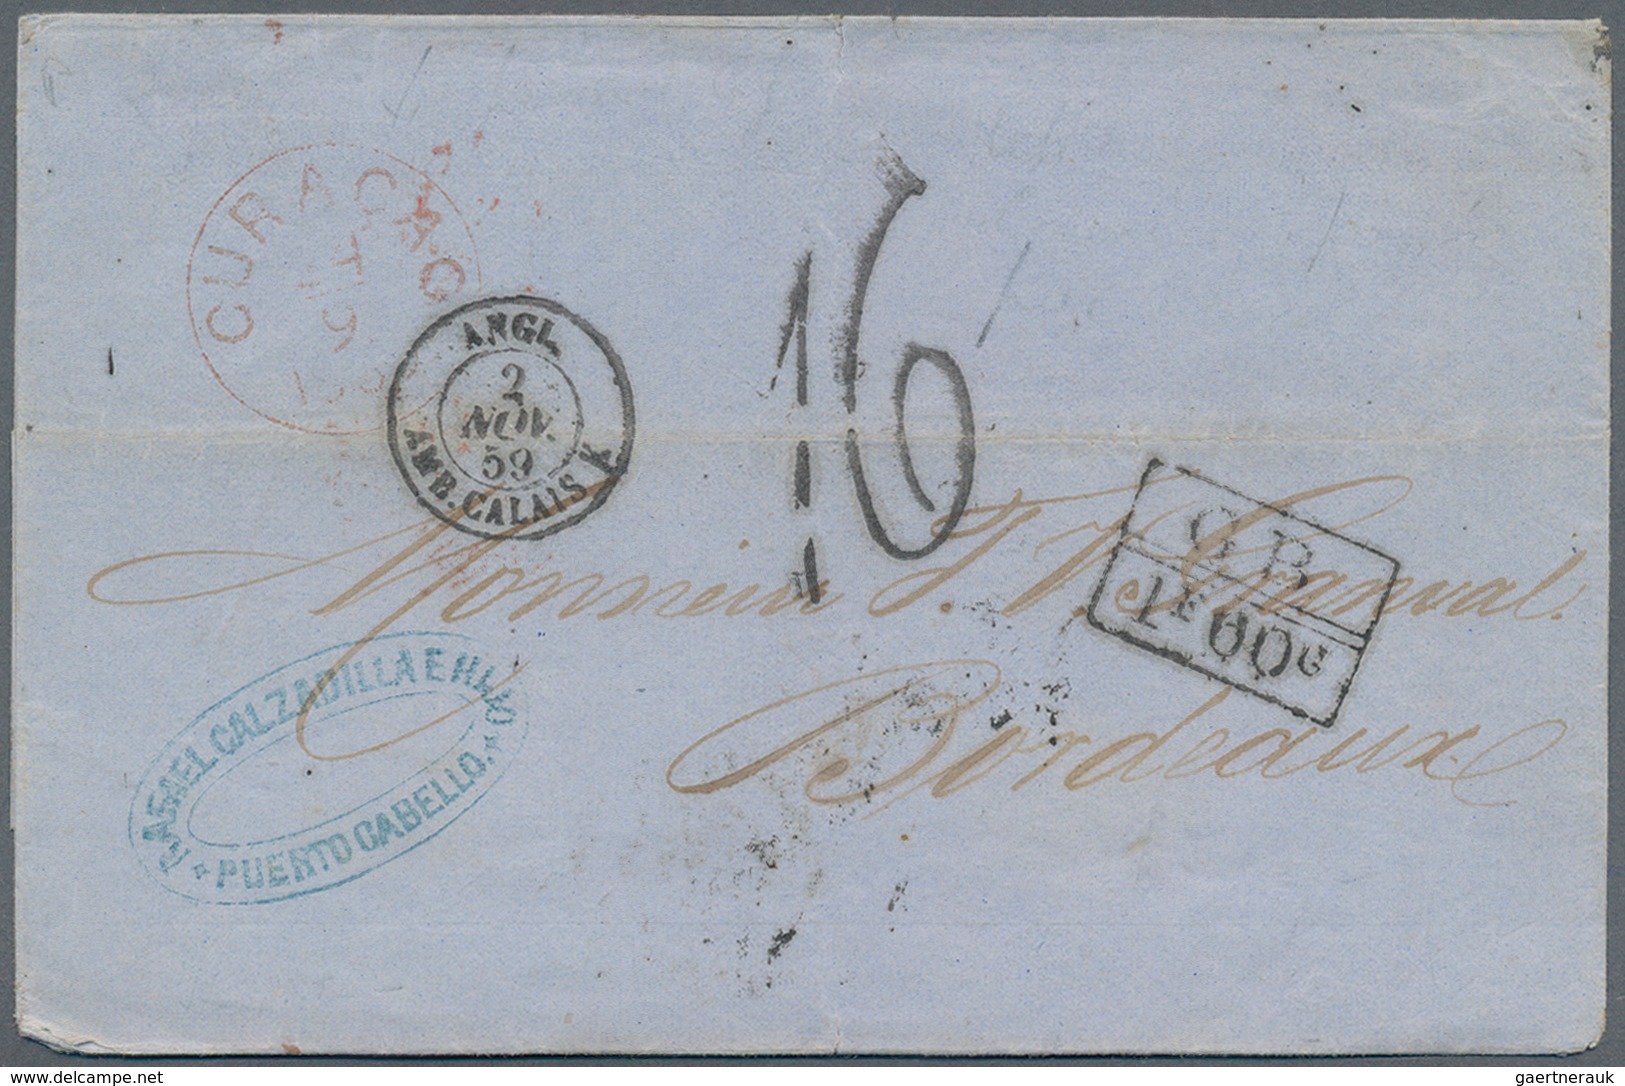 Curacao: 1859. Stamp-less Envelope Written From Puerto Cabello (Venezuela) Addressed To France With - Curaçao, Nederlandse Antillen, Aruba